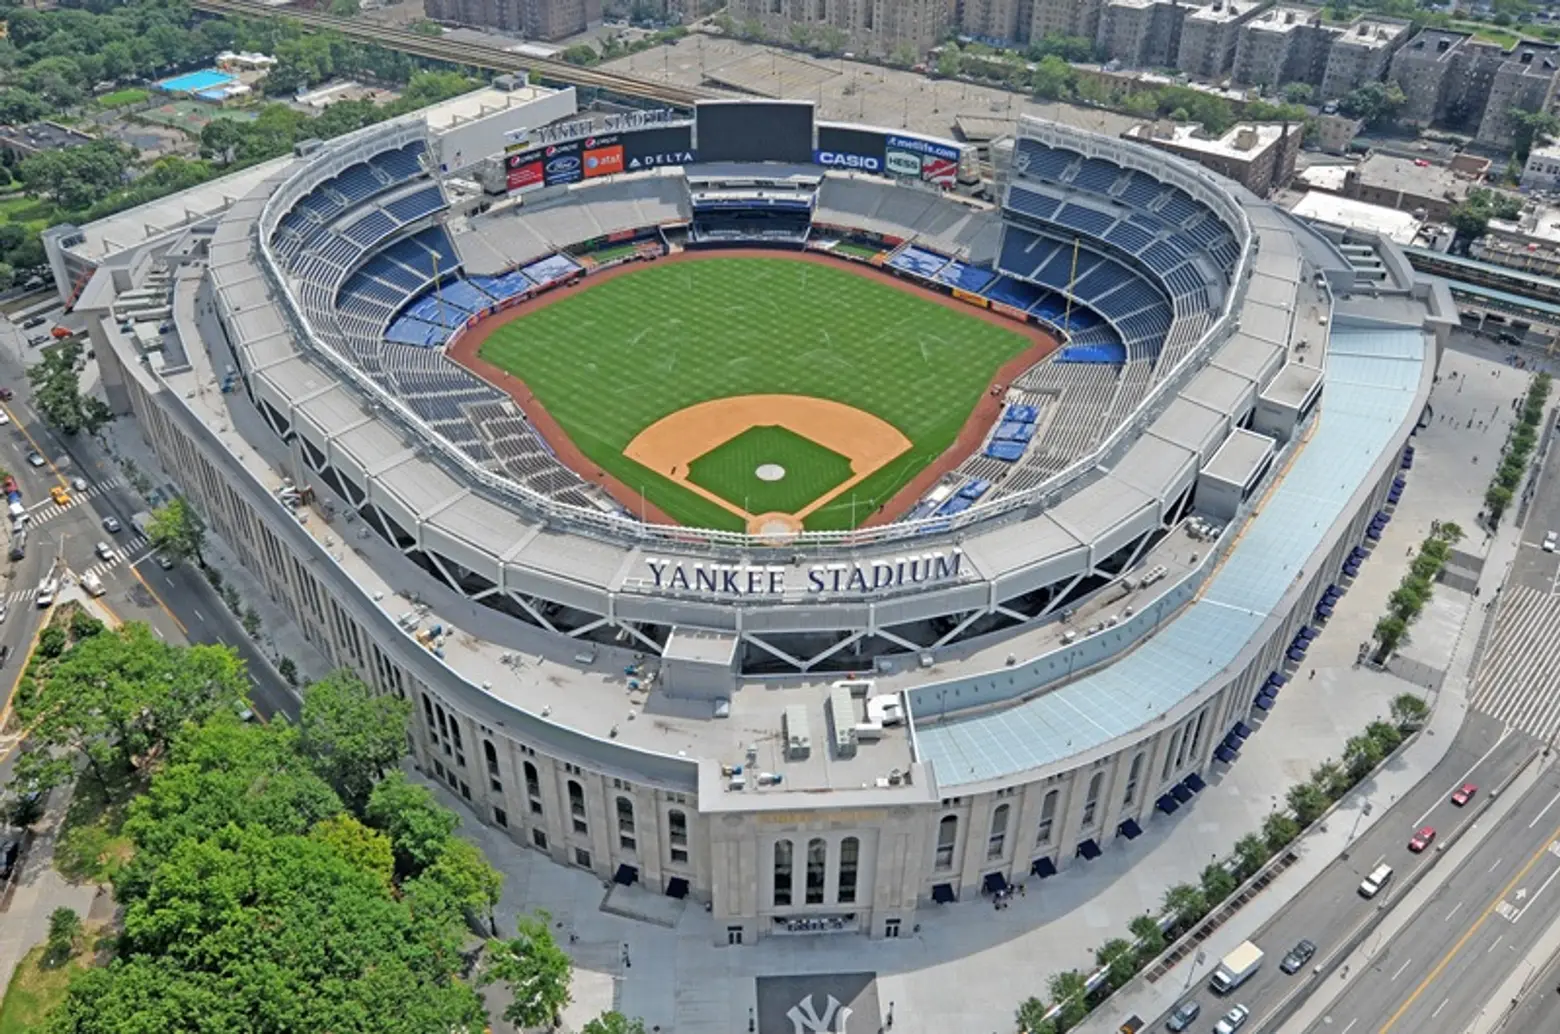 Yankee Stadium was unveiled 100 years ago